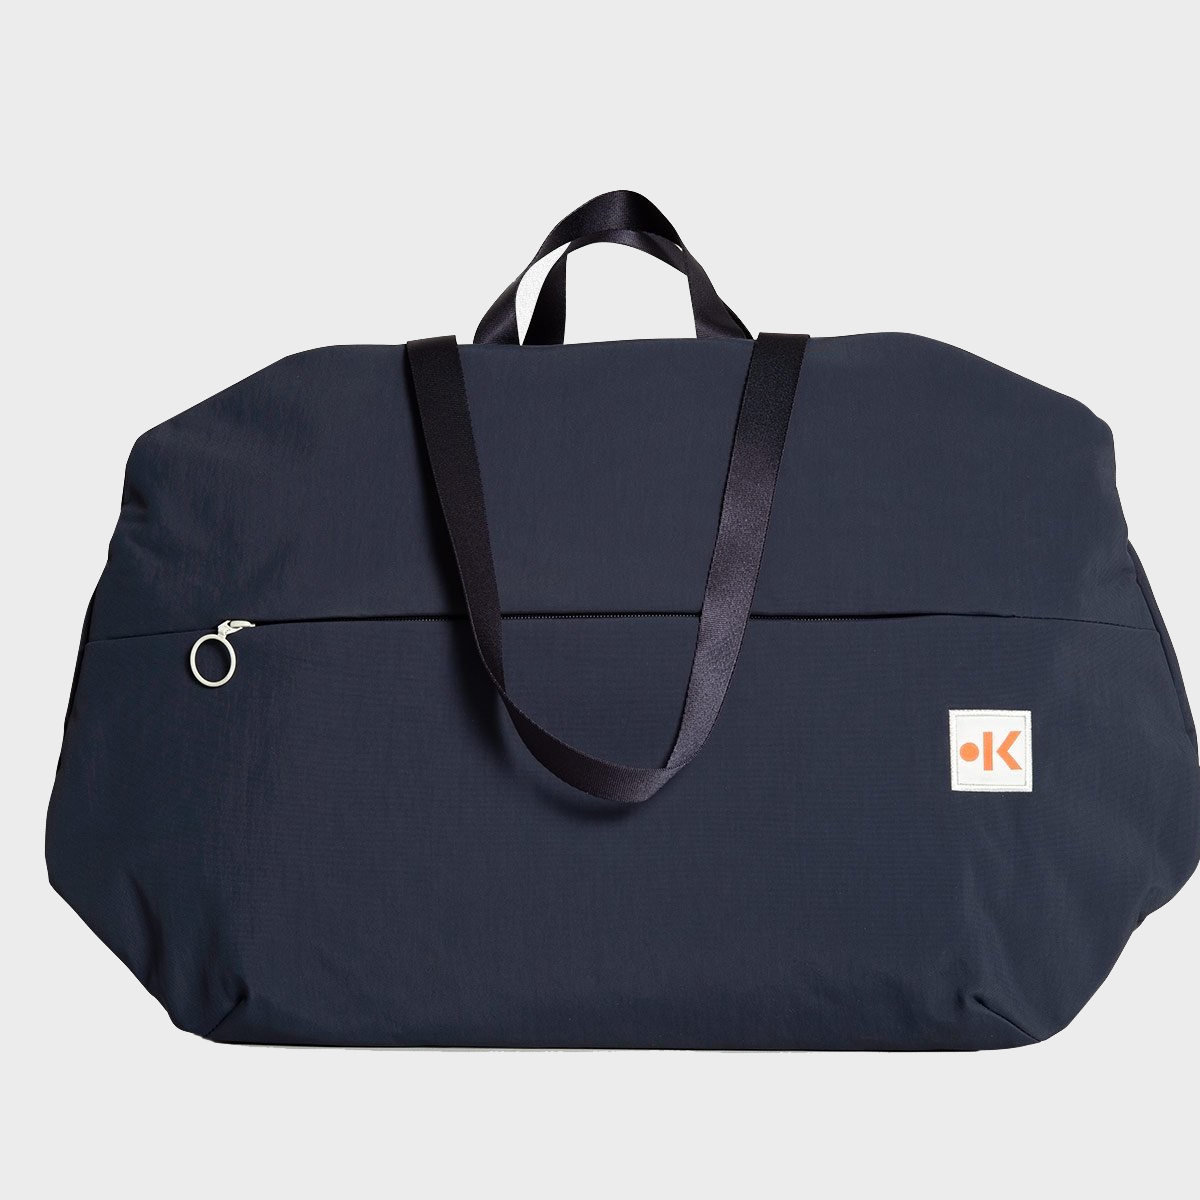 kaalaボストンバッグCloud bag - blueish black